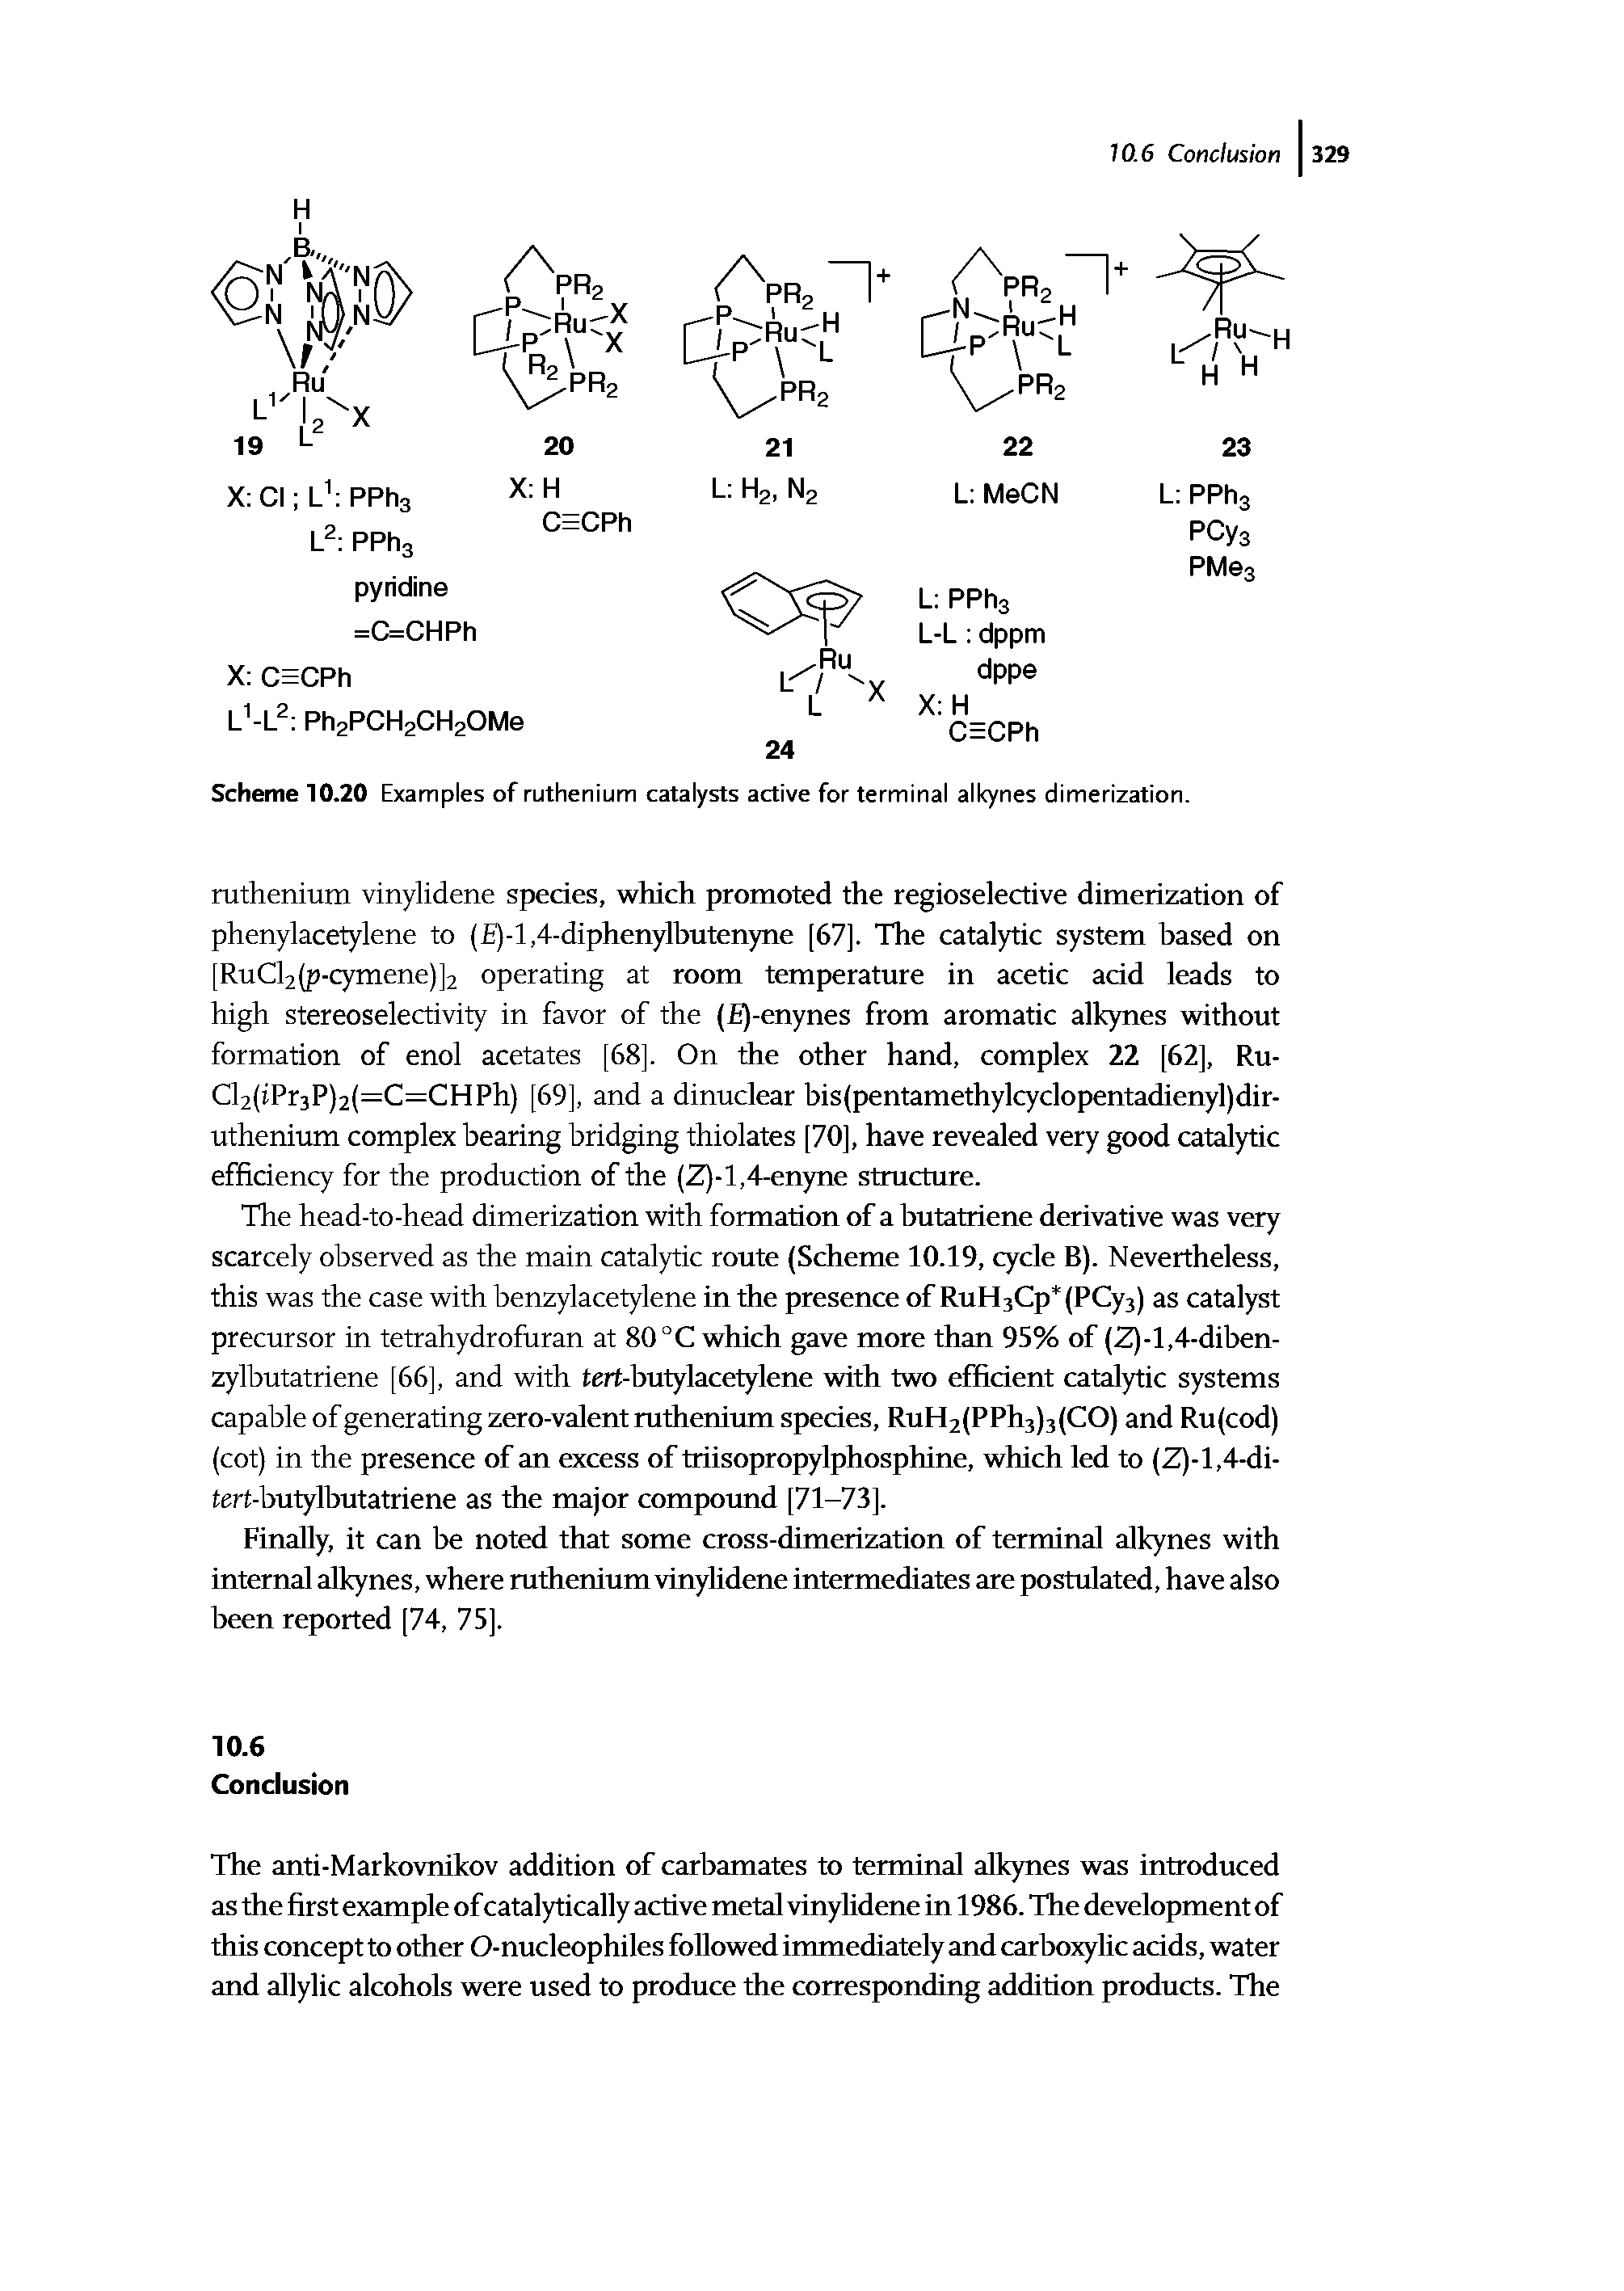 Scheme 10.20 Examples of ruthenium catalysts active for terminal alkynes dimerization.